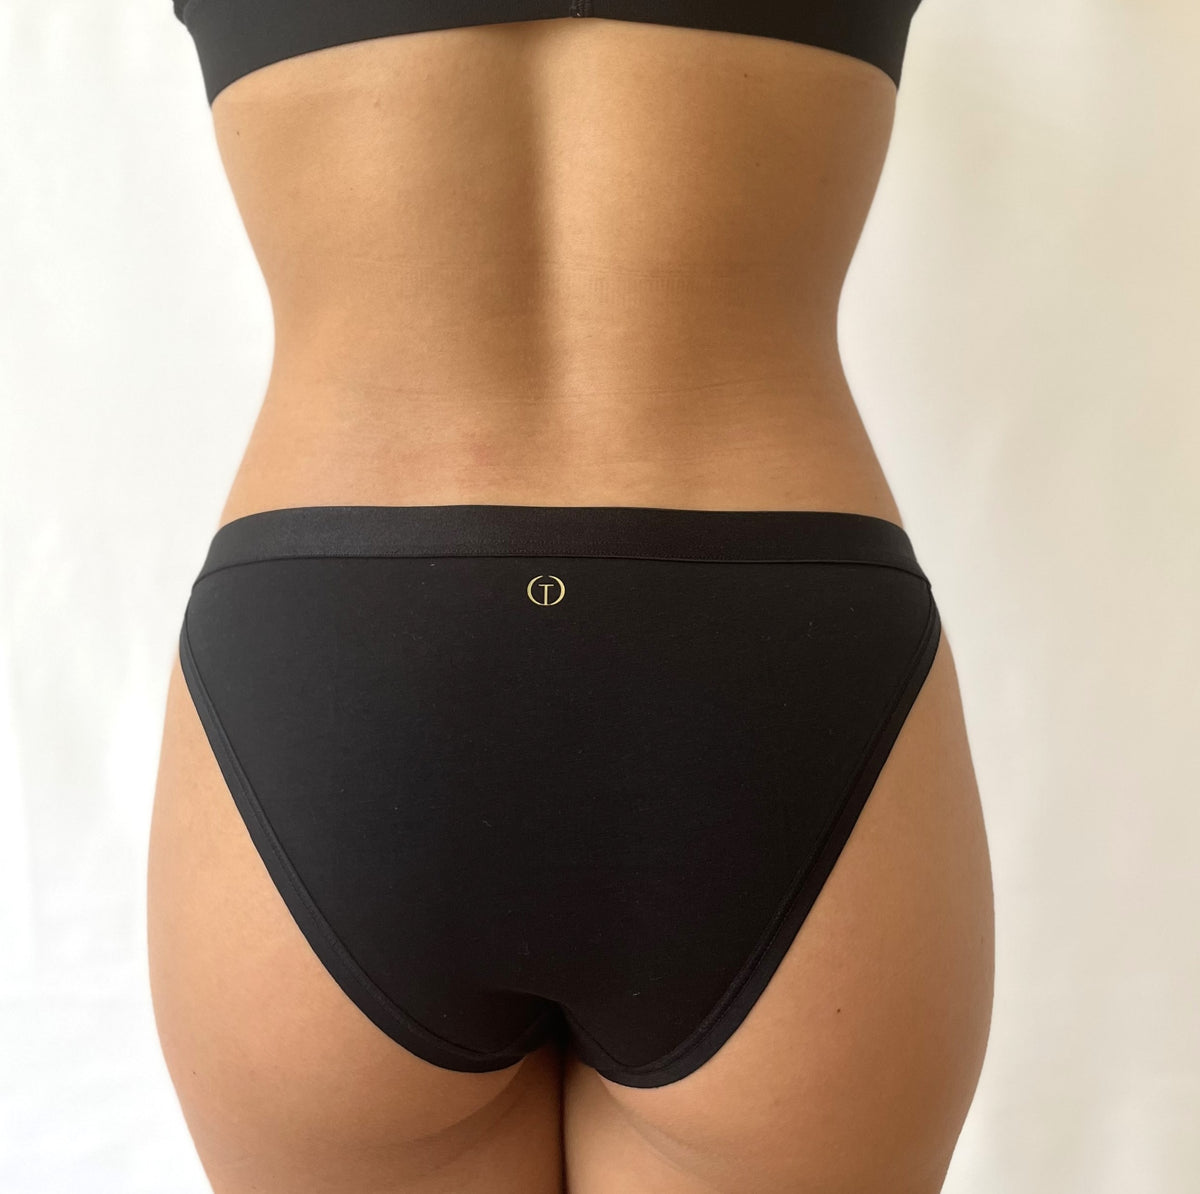 Zhiyao Ouvert Briefs Thong Women's Wetlook Bikini Patent Leather Briefs  Faux Leather Underwear Shorts Short Pants Lace Panties Gogo Clubwear, a, S  : : Fashion